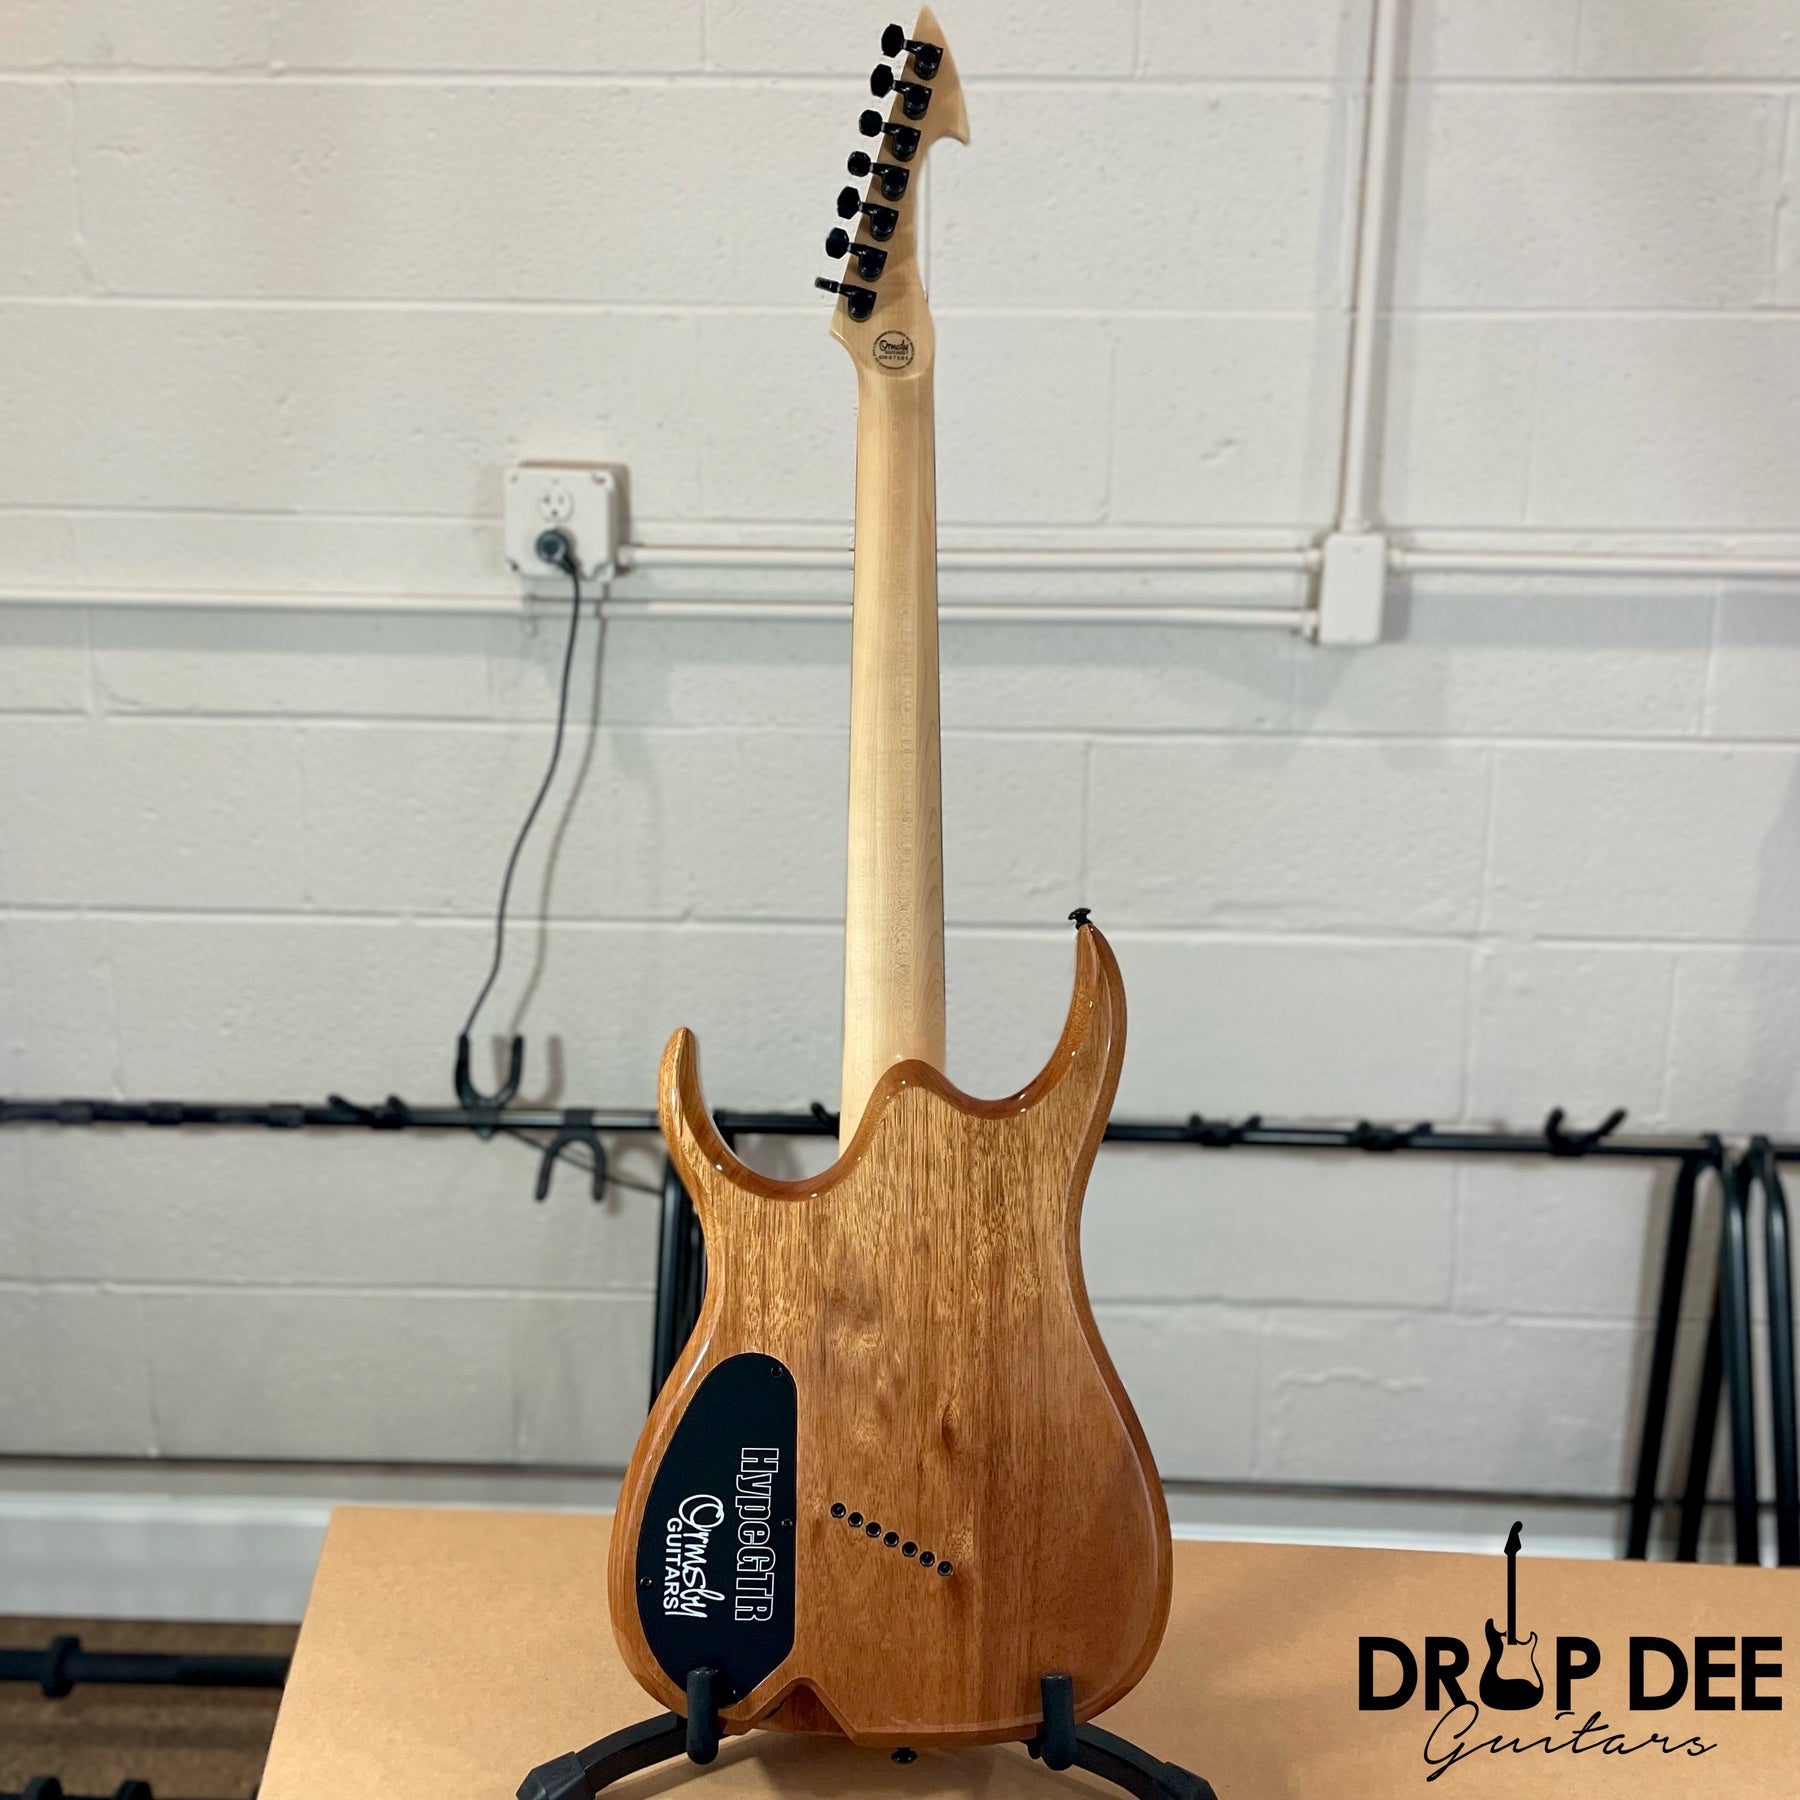 Ormsby Hype GTR Run 16 7-String Electric Guitar w/ Bag